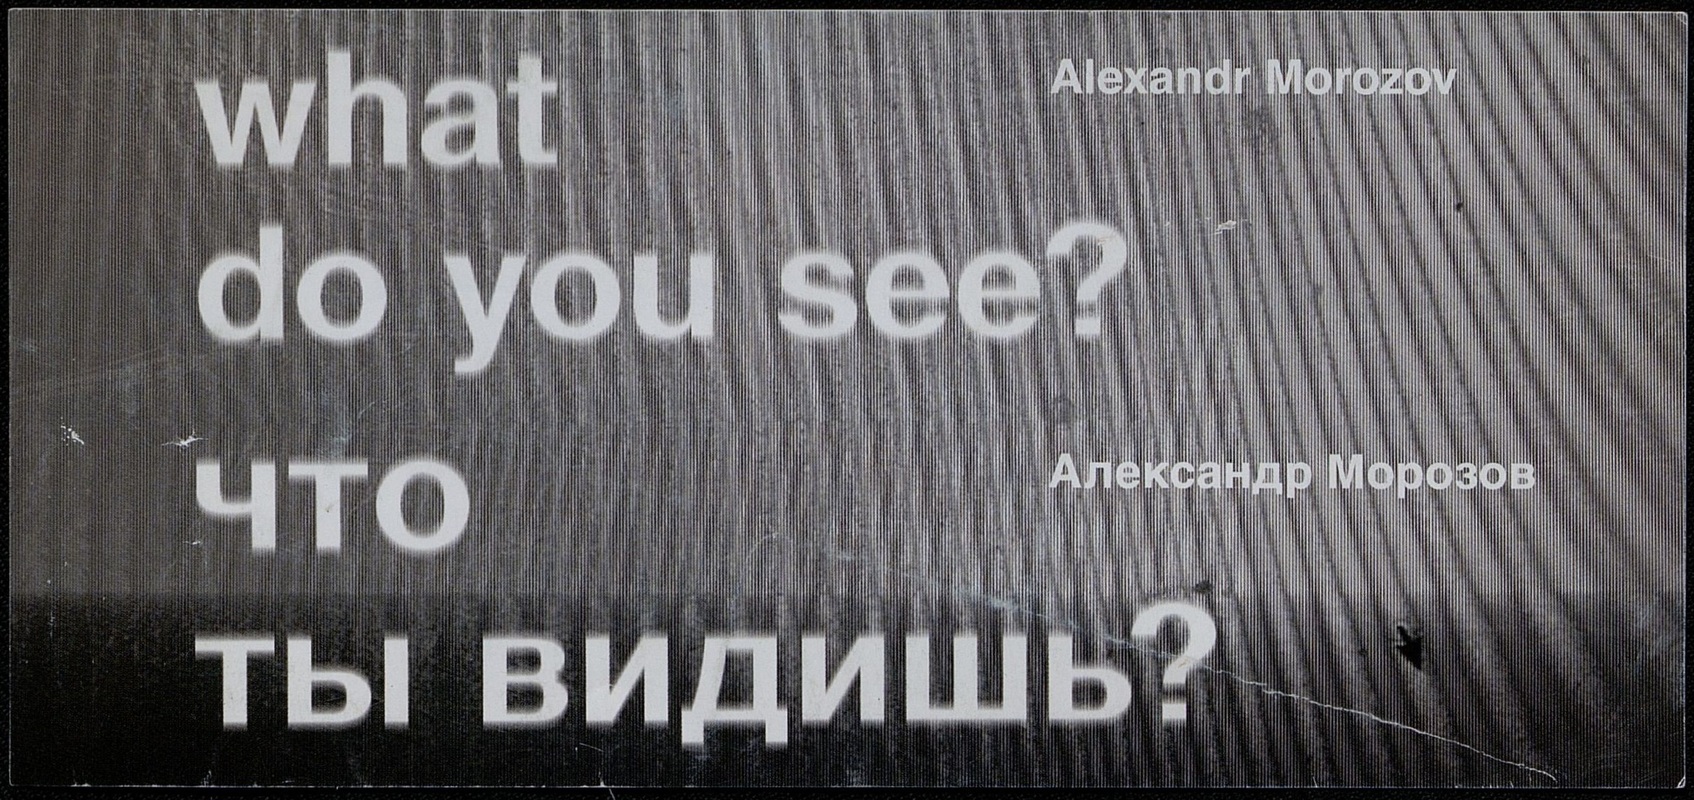 Alexander Morozov. What do you see?